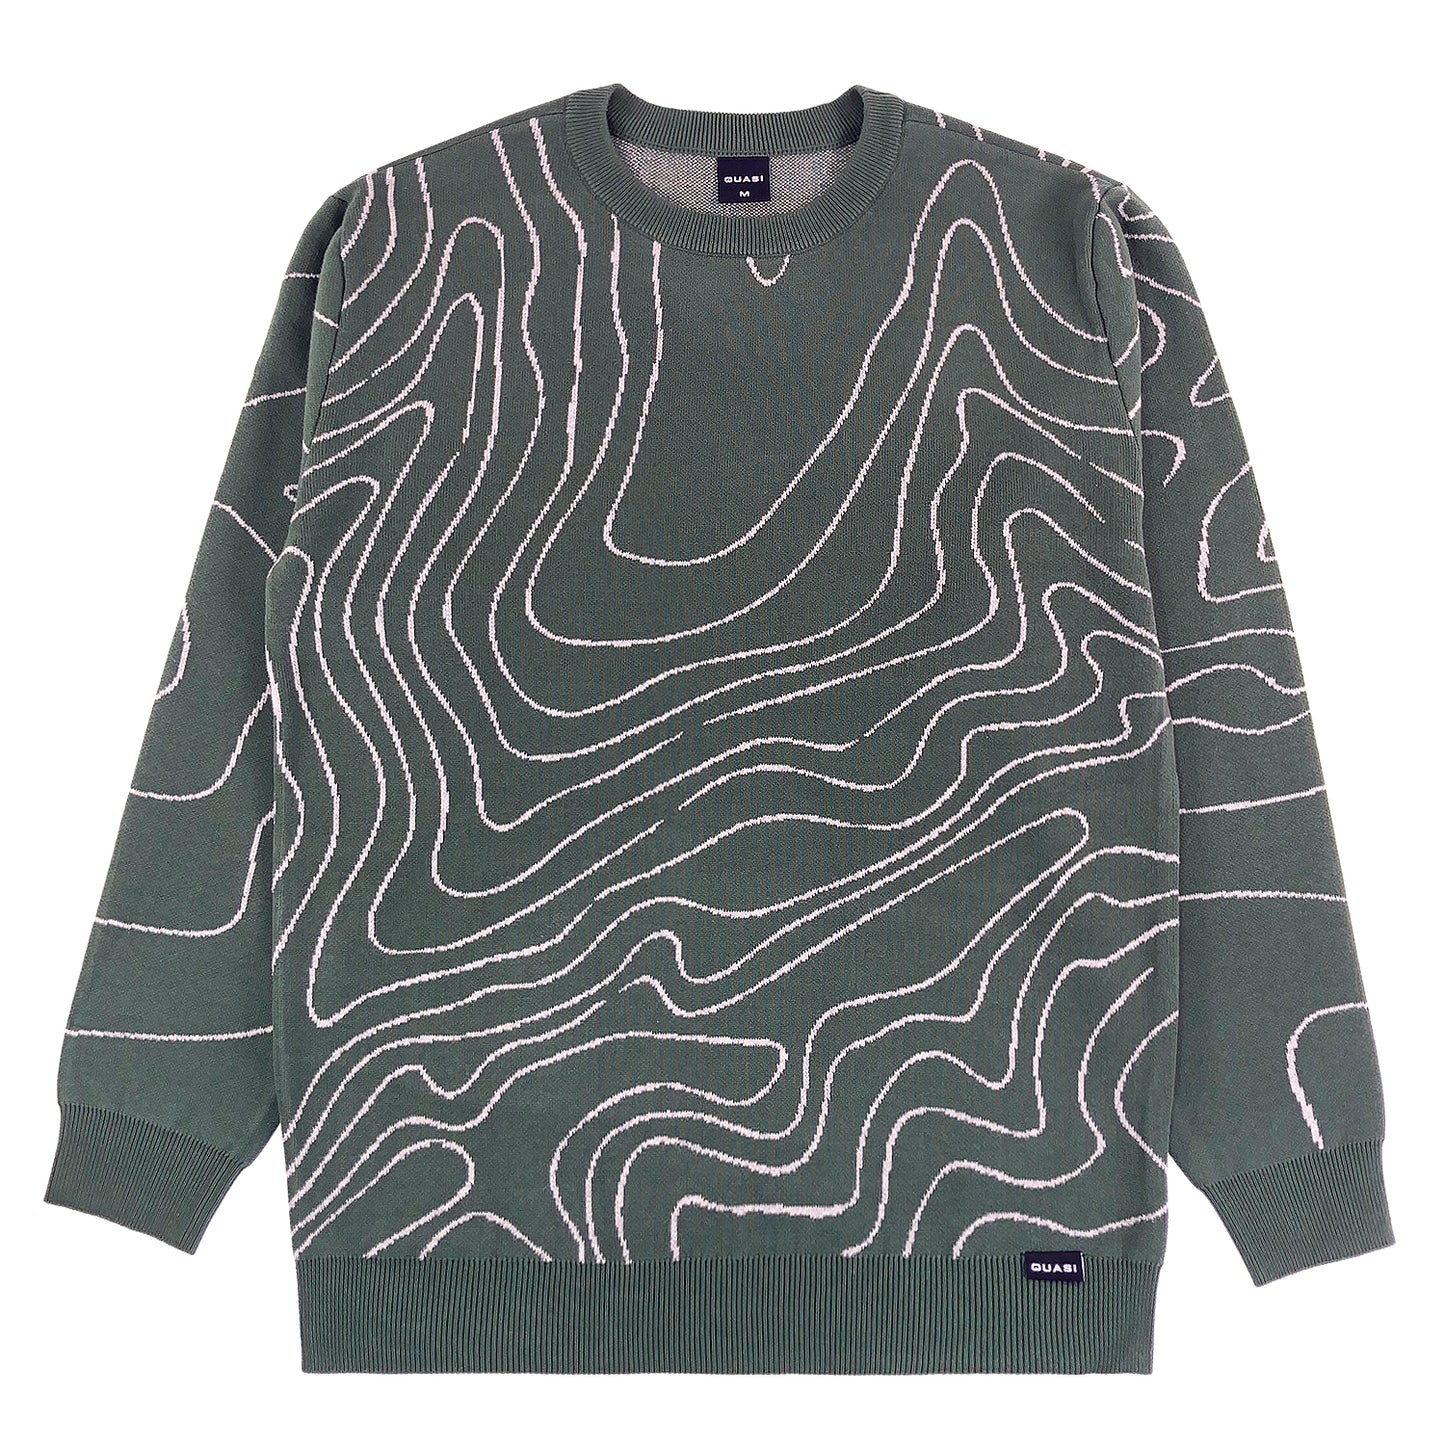 Quasi Topo Sweater - Forest - Prime Delux Store